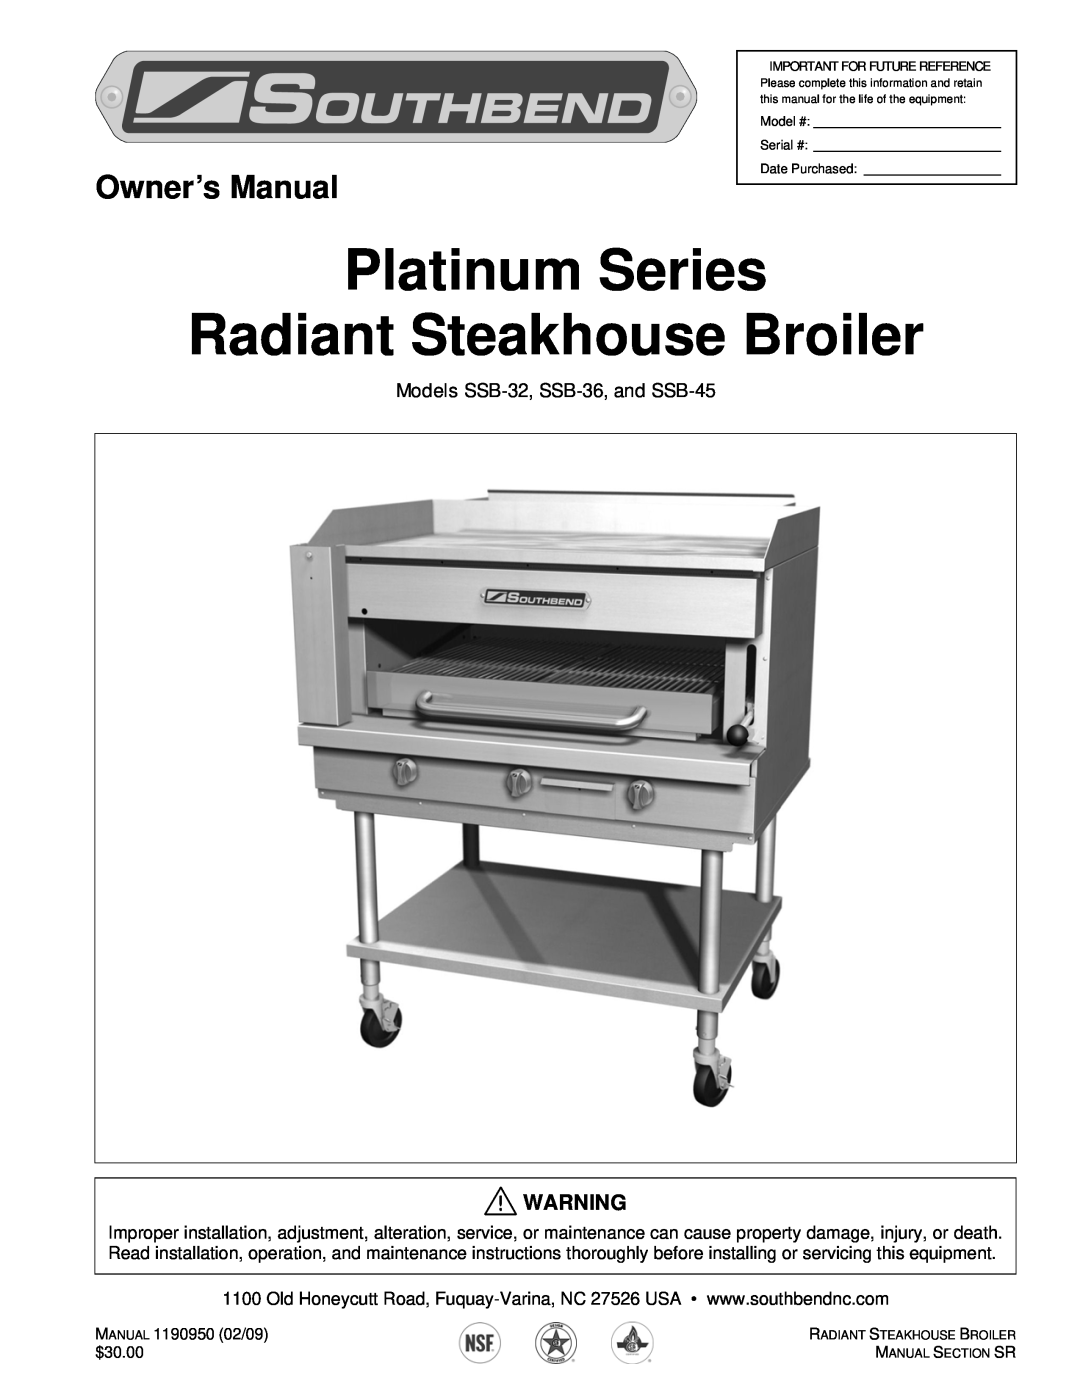 Southbend owner manual Models SSB-32, SSB-36, and SSB-45, Platinum Series Radiant Steakhouse Broiler 